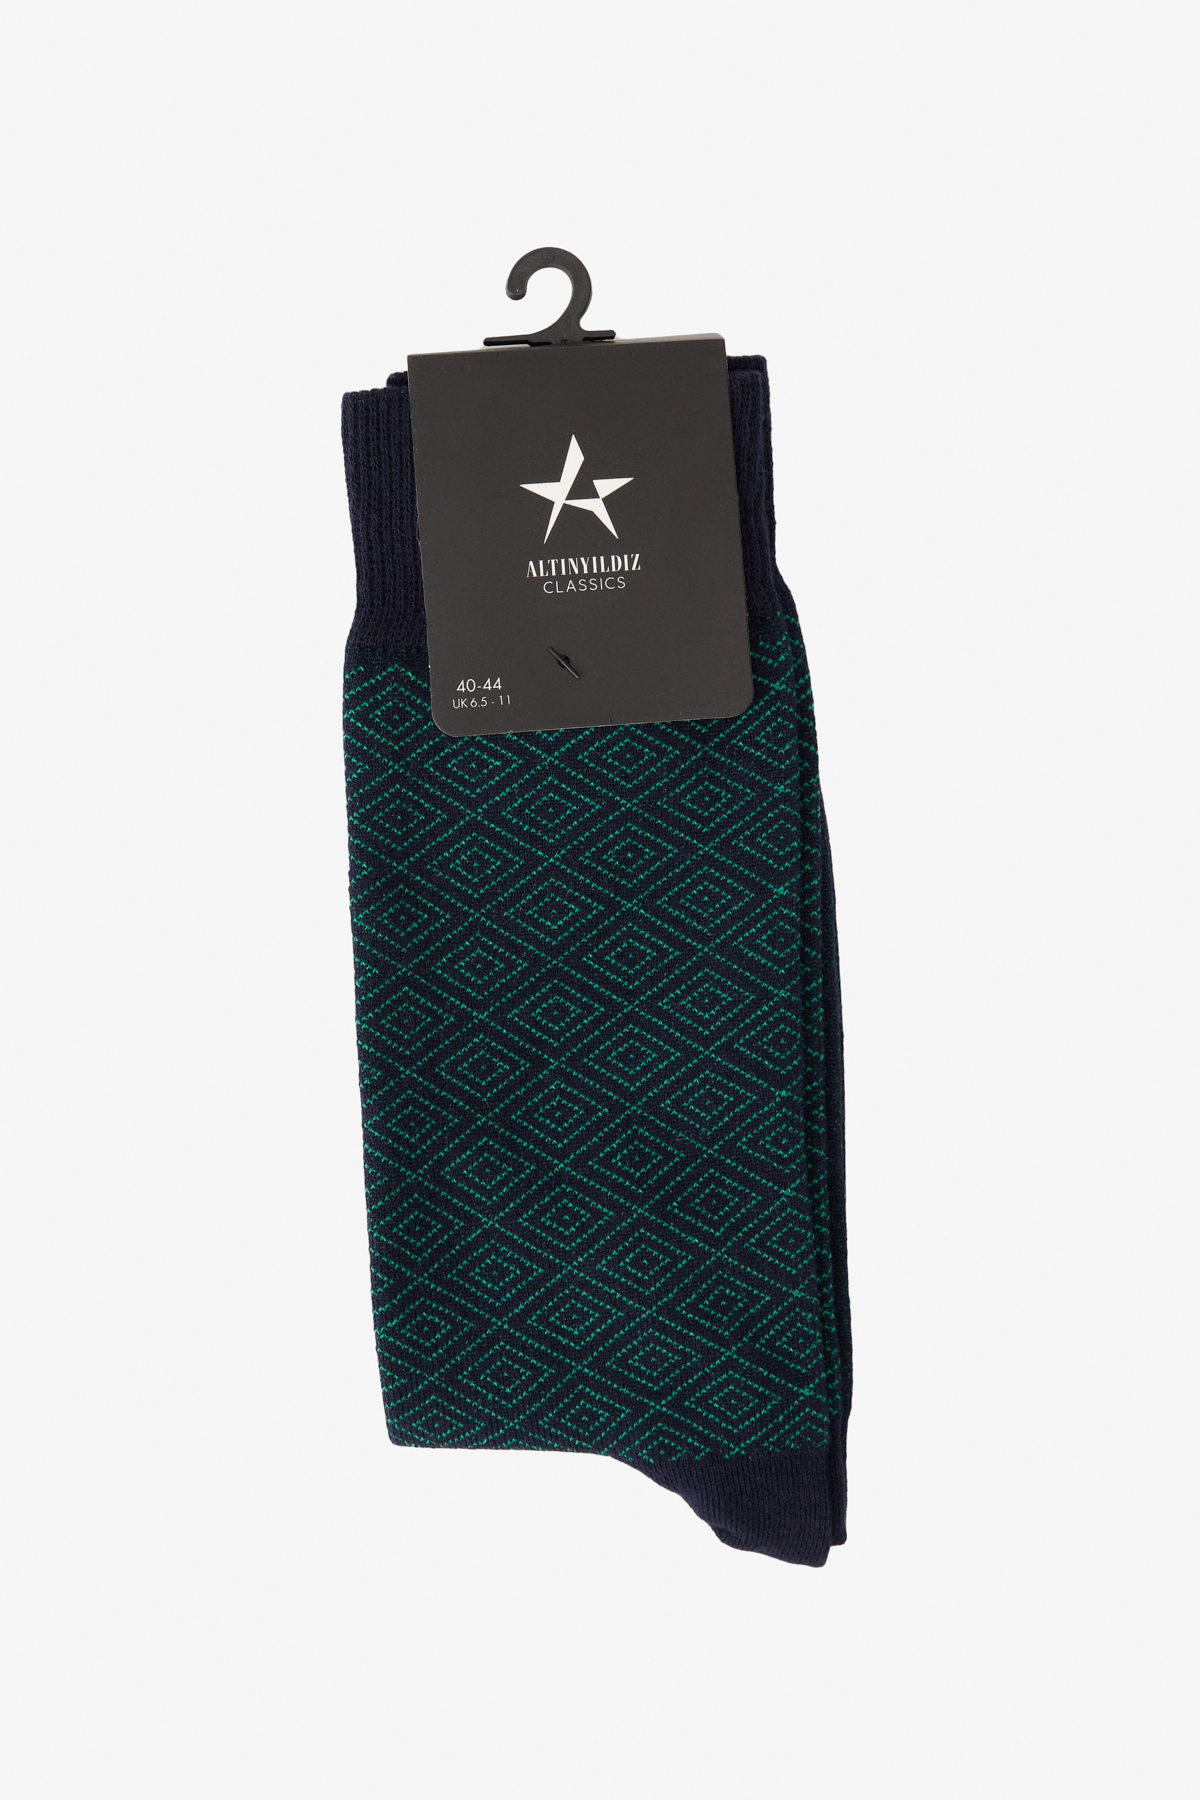 ALTINYILDIZ CLASSICS Men's Navy Blue-Green Patterned Bamboo Socks